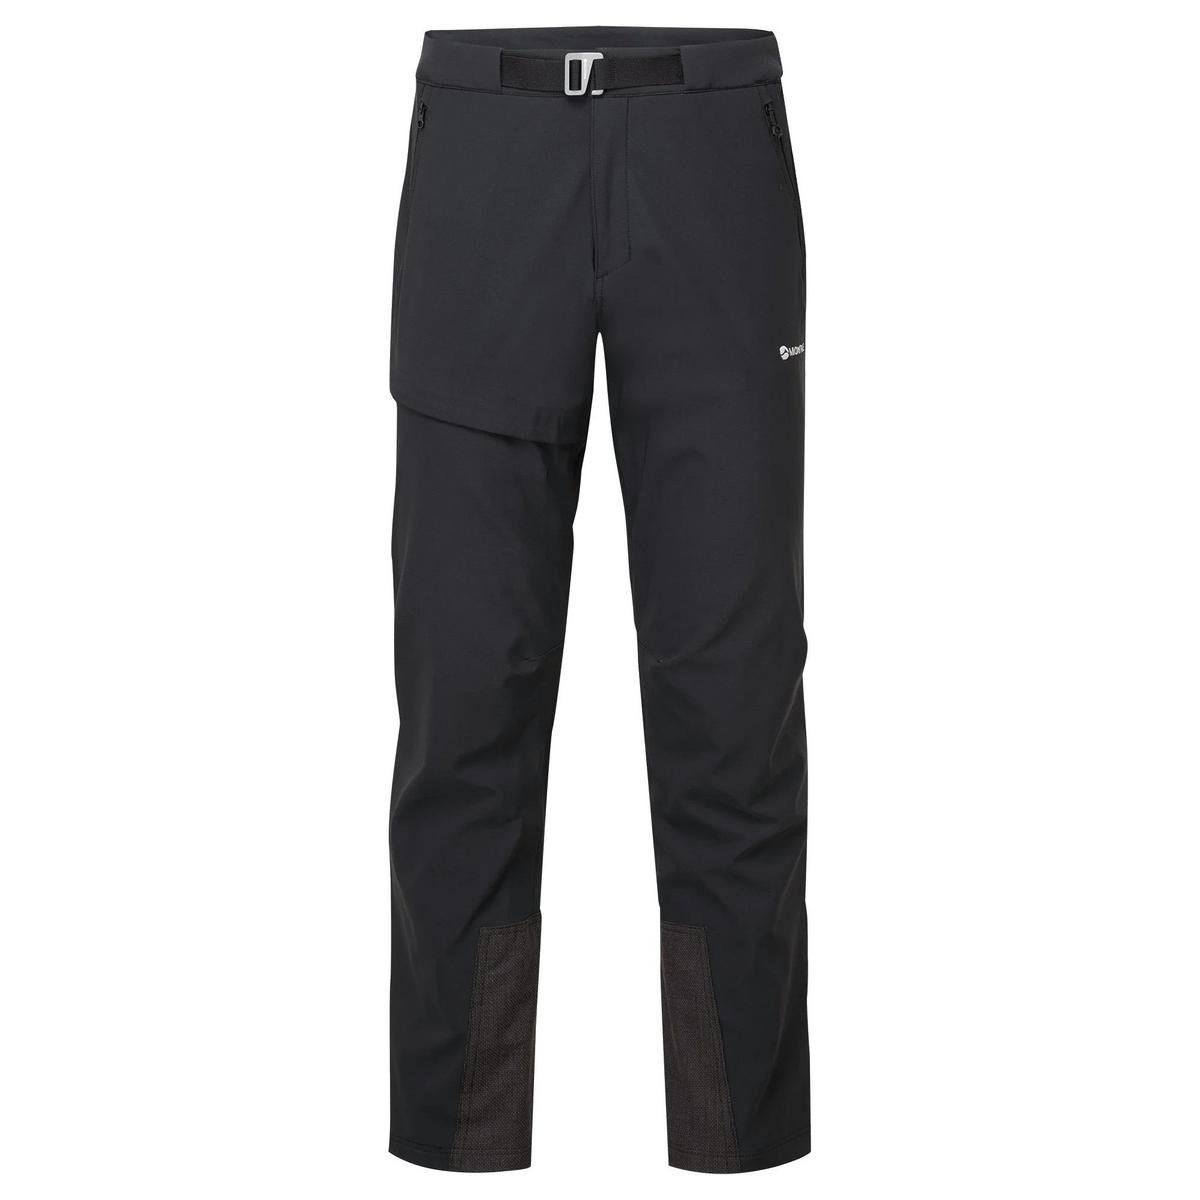 Montane Men's Tenacity XT Pants (Regular) - Black